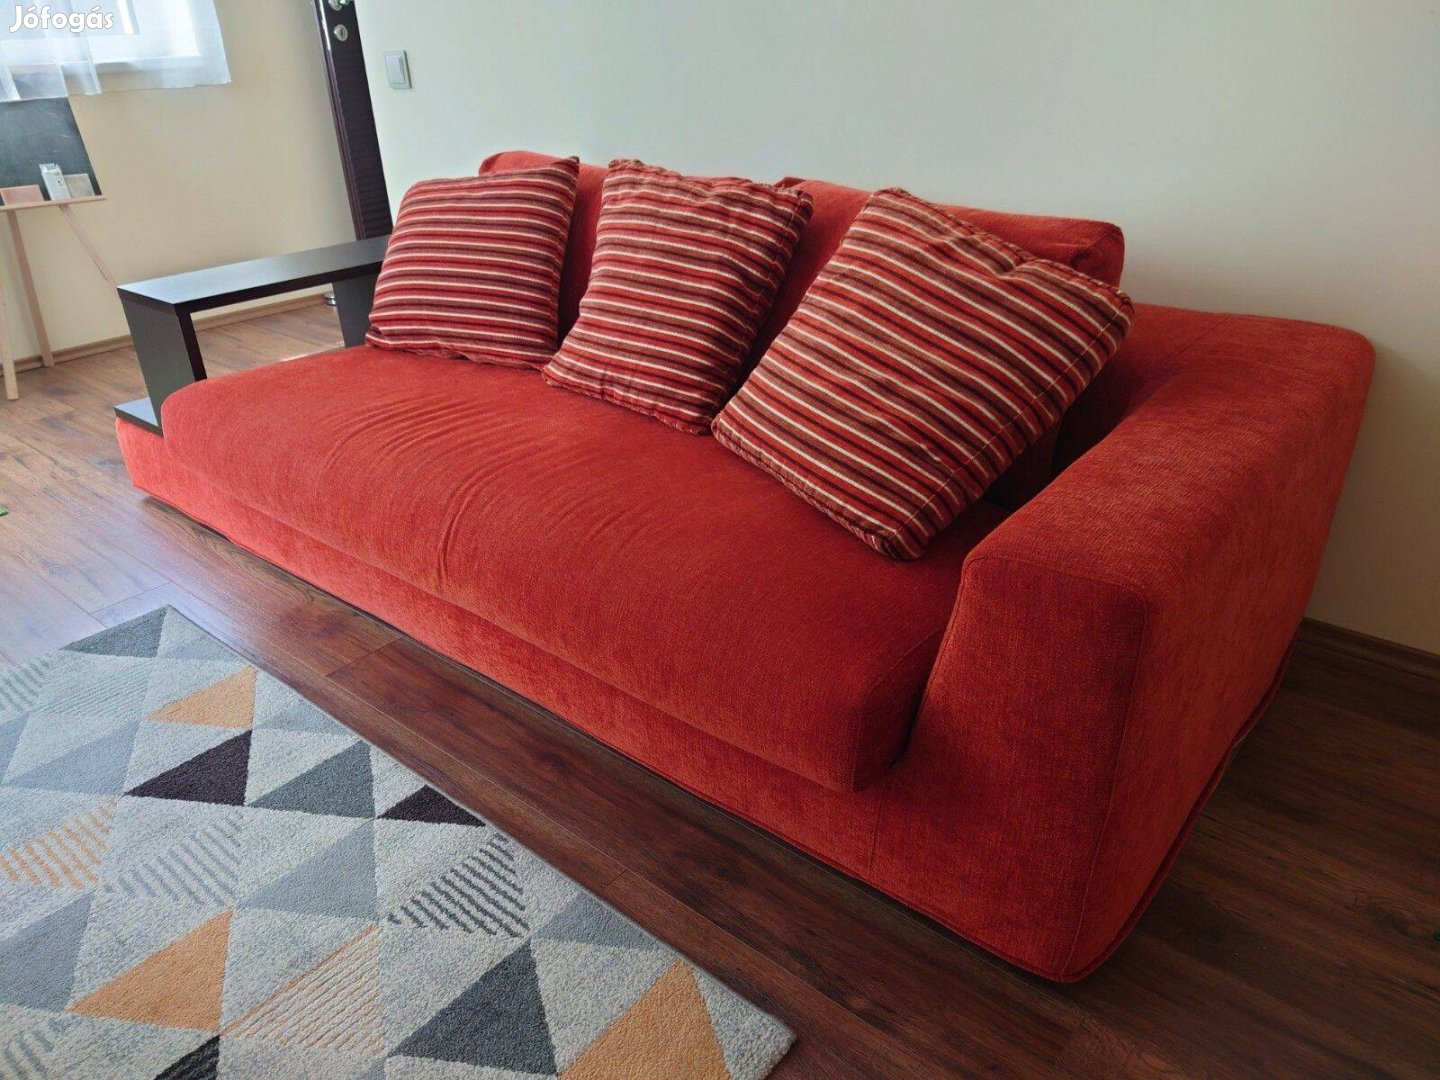 Olasz design kanapé, tároló polccal